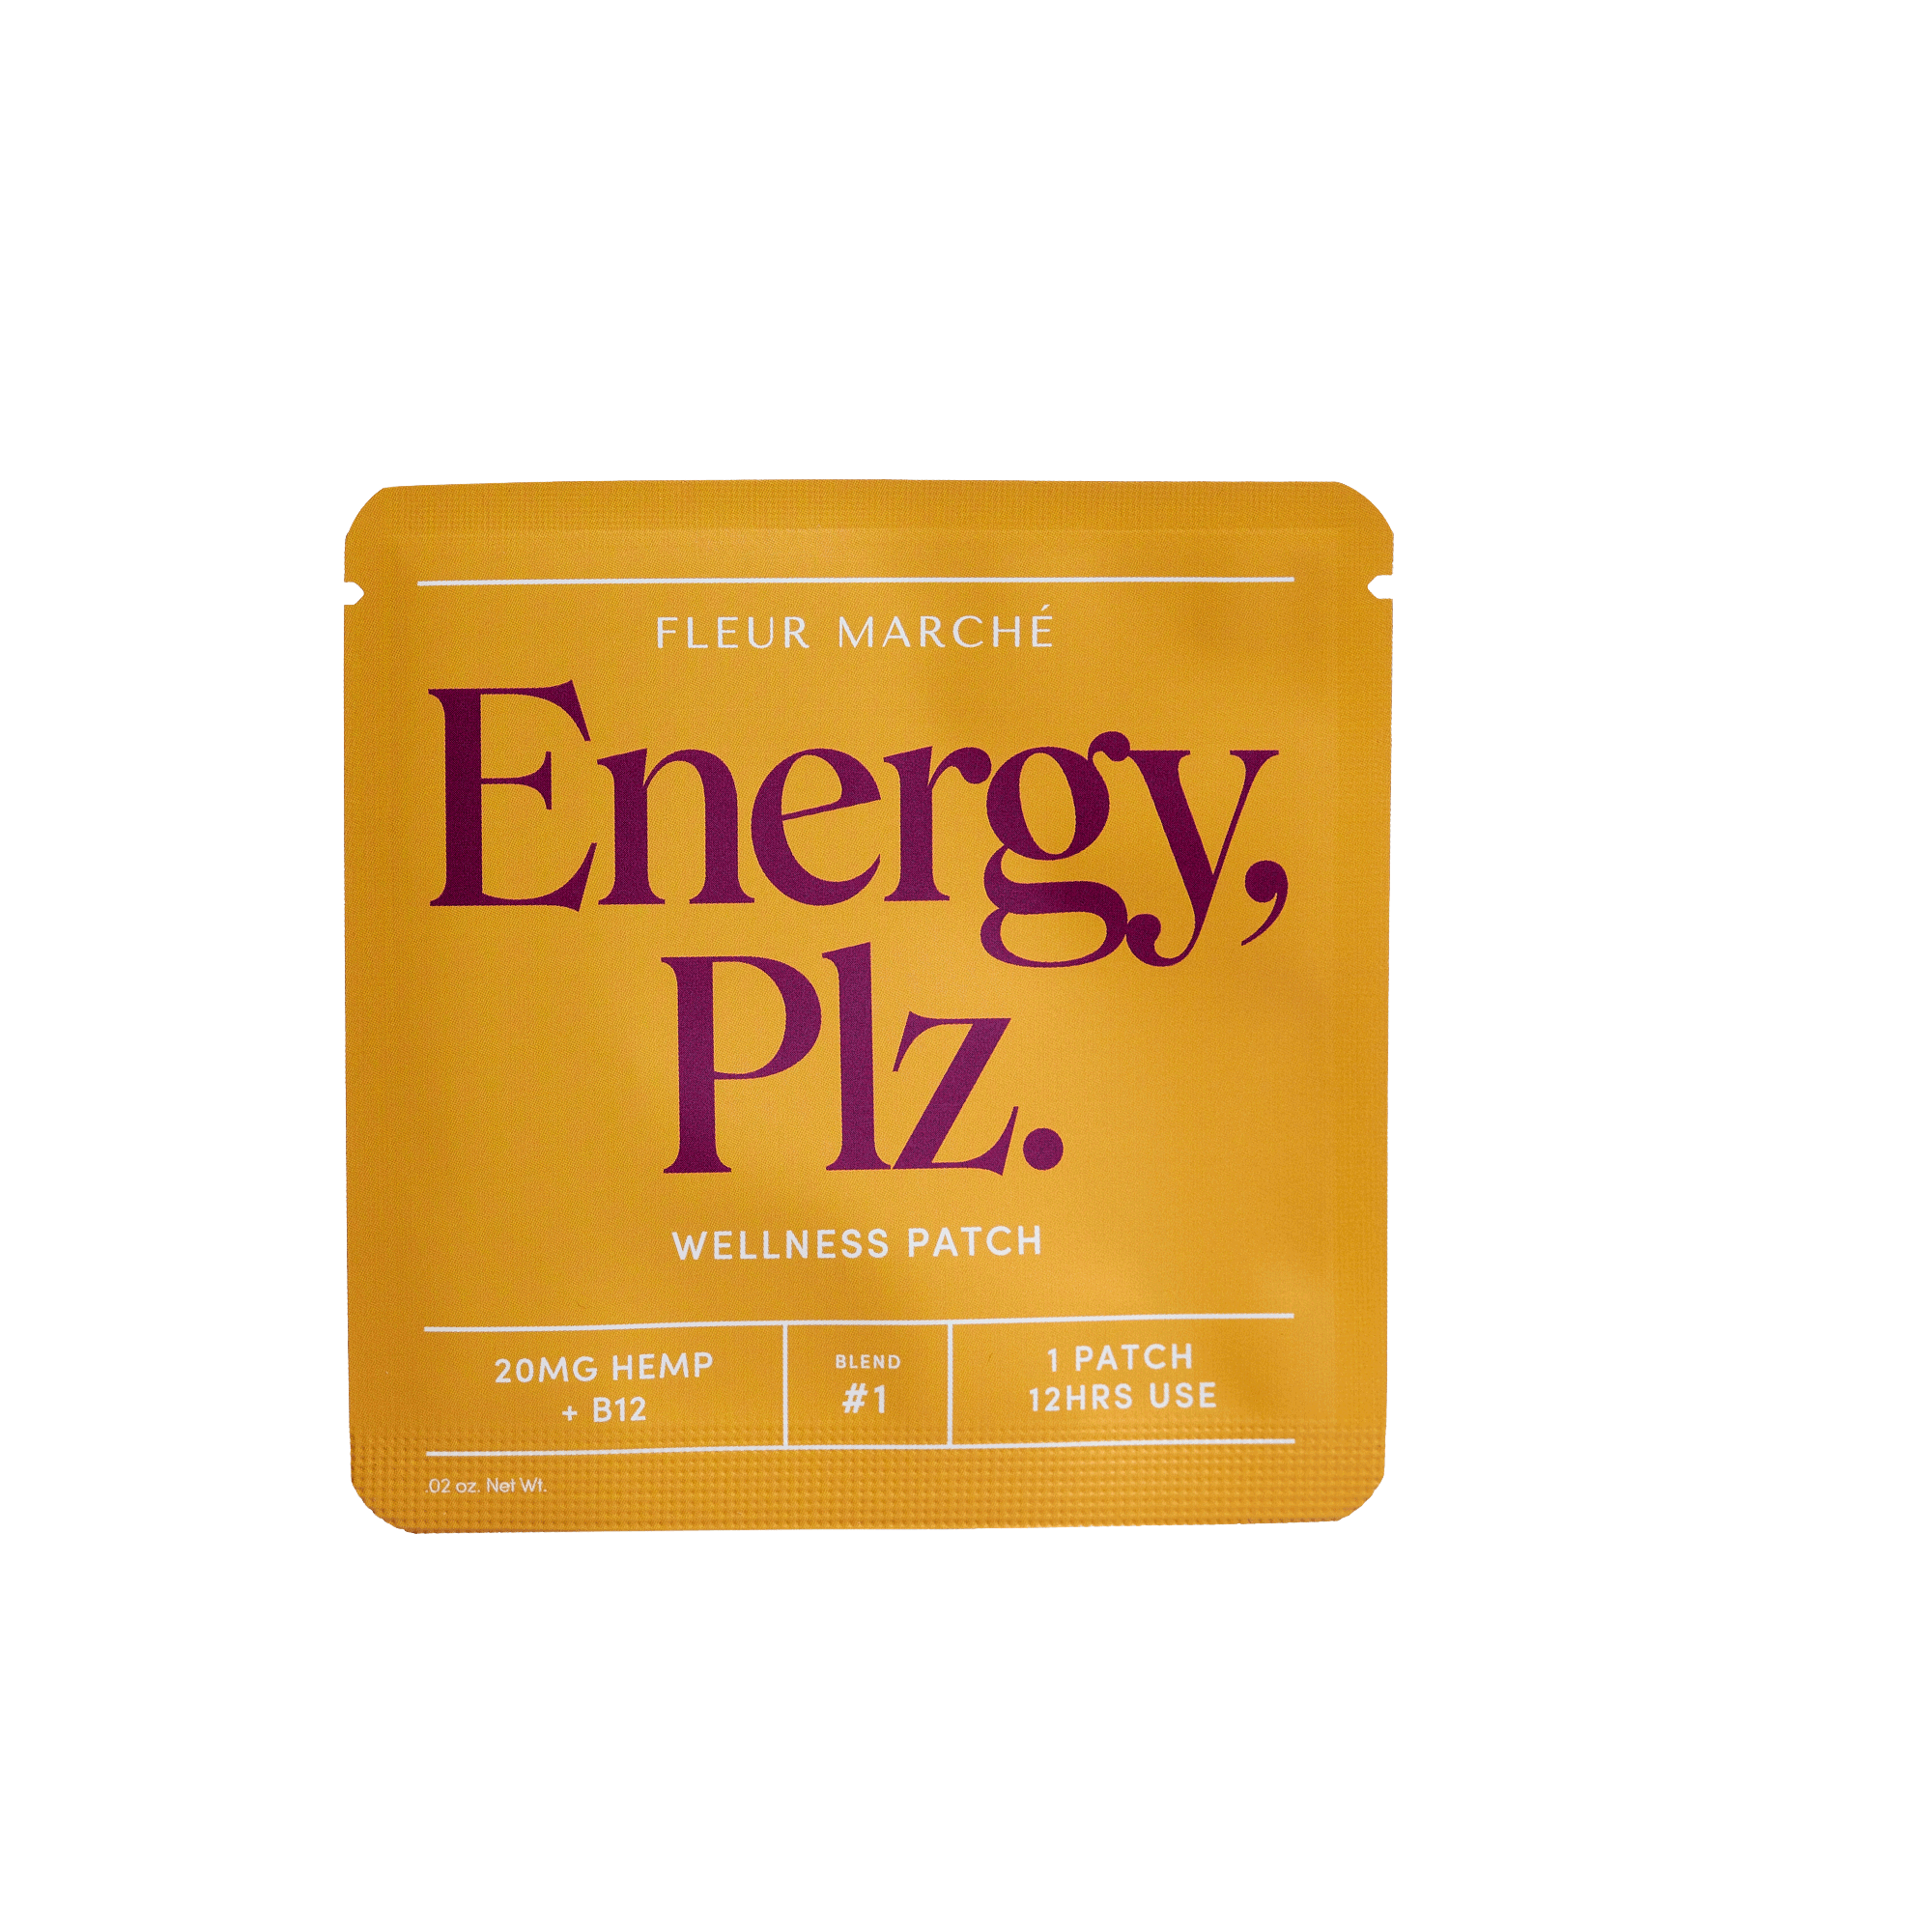 Energy Plz. in its sleeve